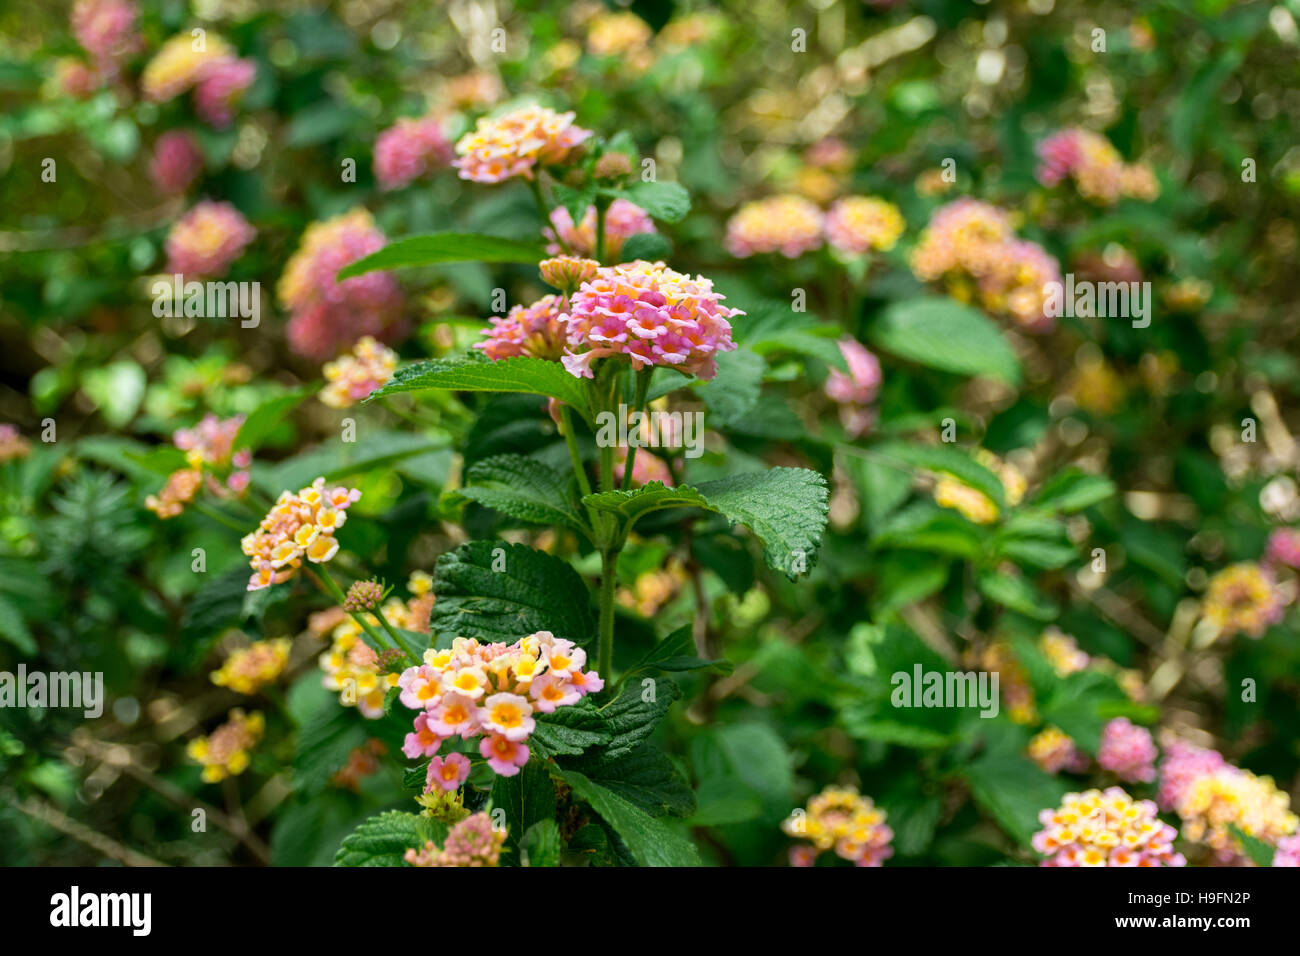 Bush of lantana flowers Stock Photo